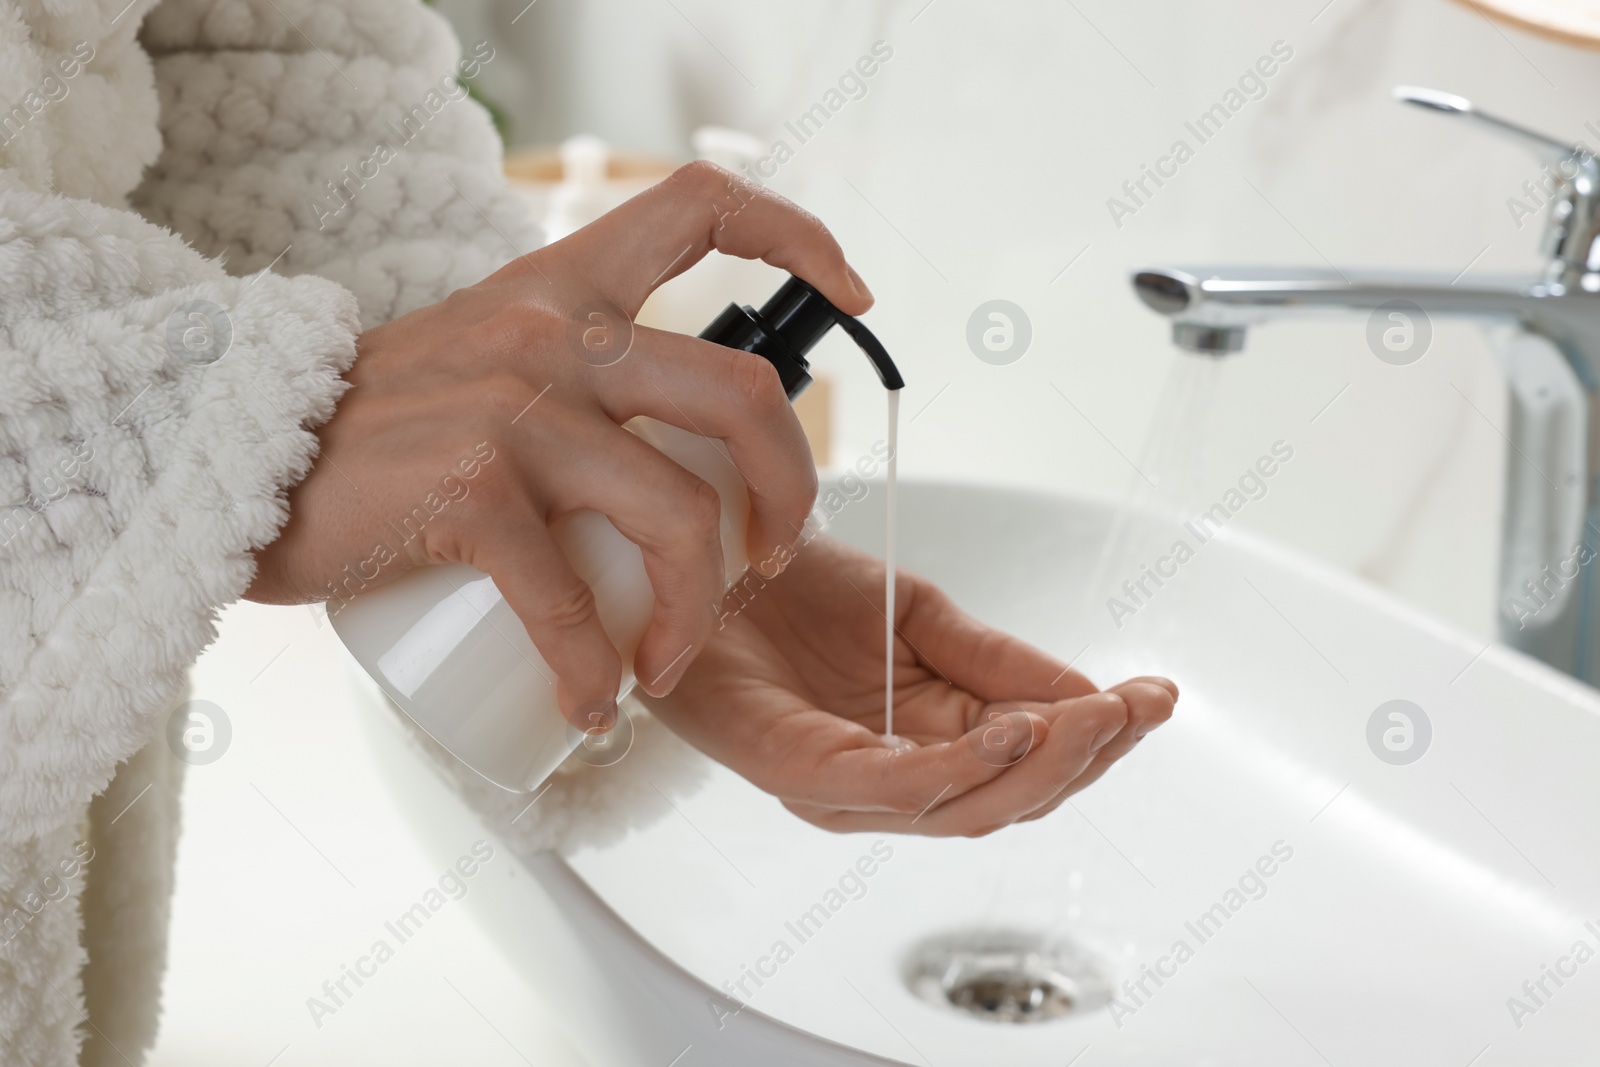 Photo of Woman using liquid soap dispenser in bathroom, closeup